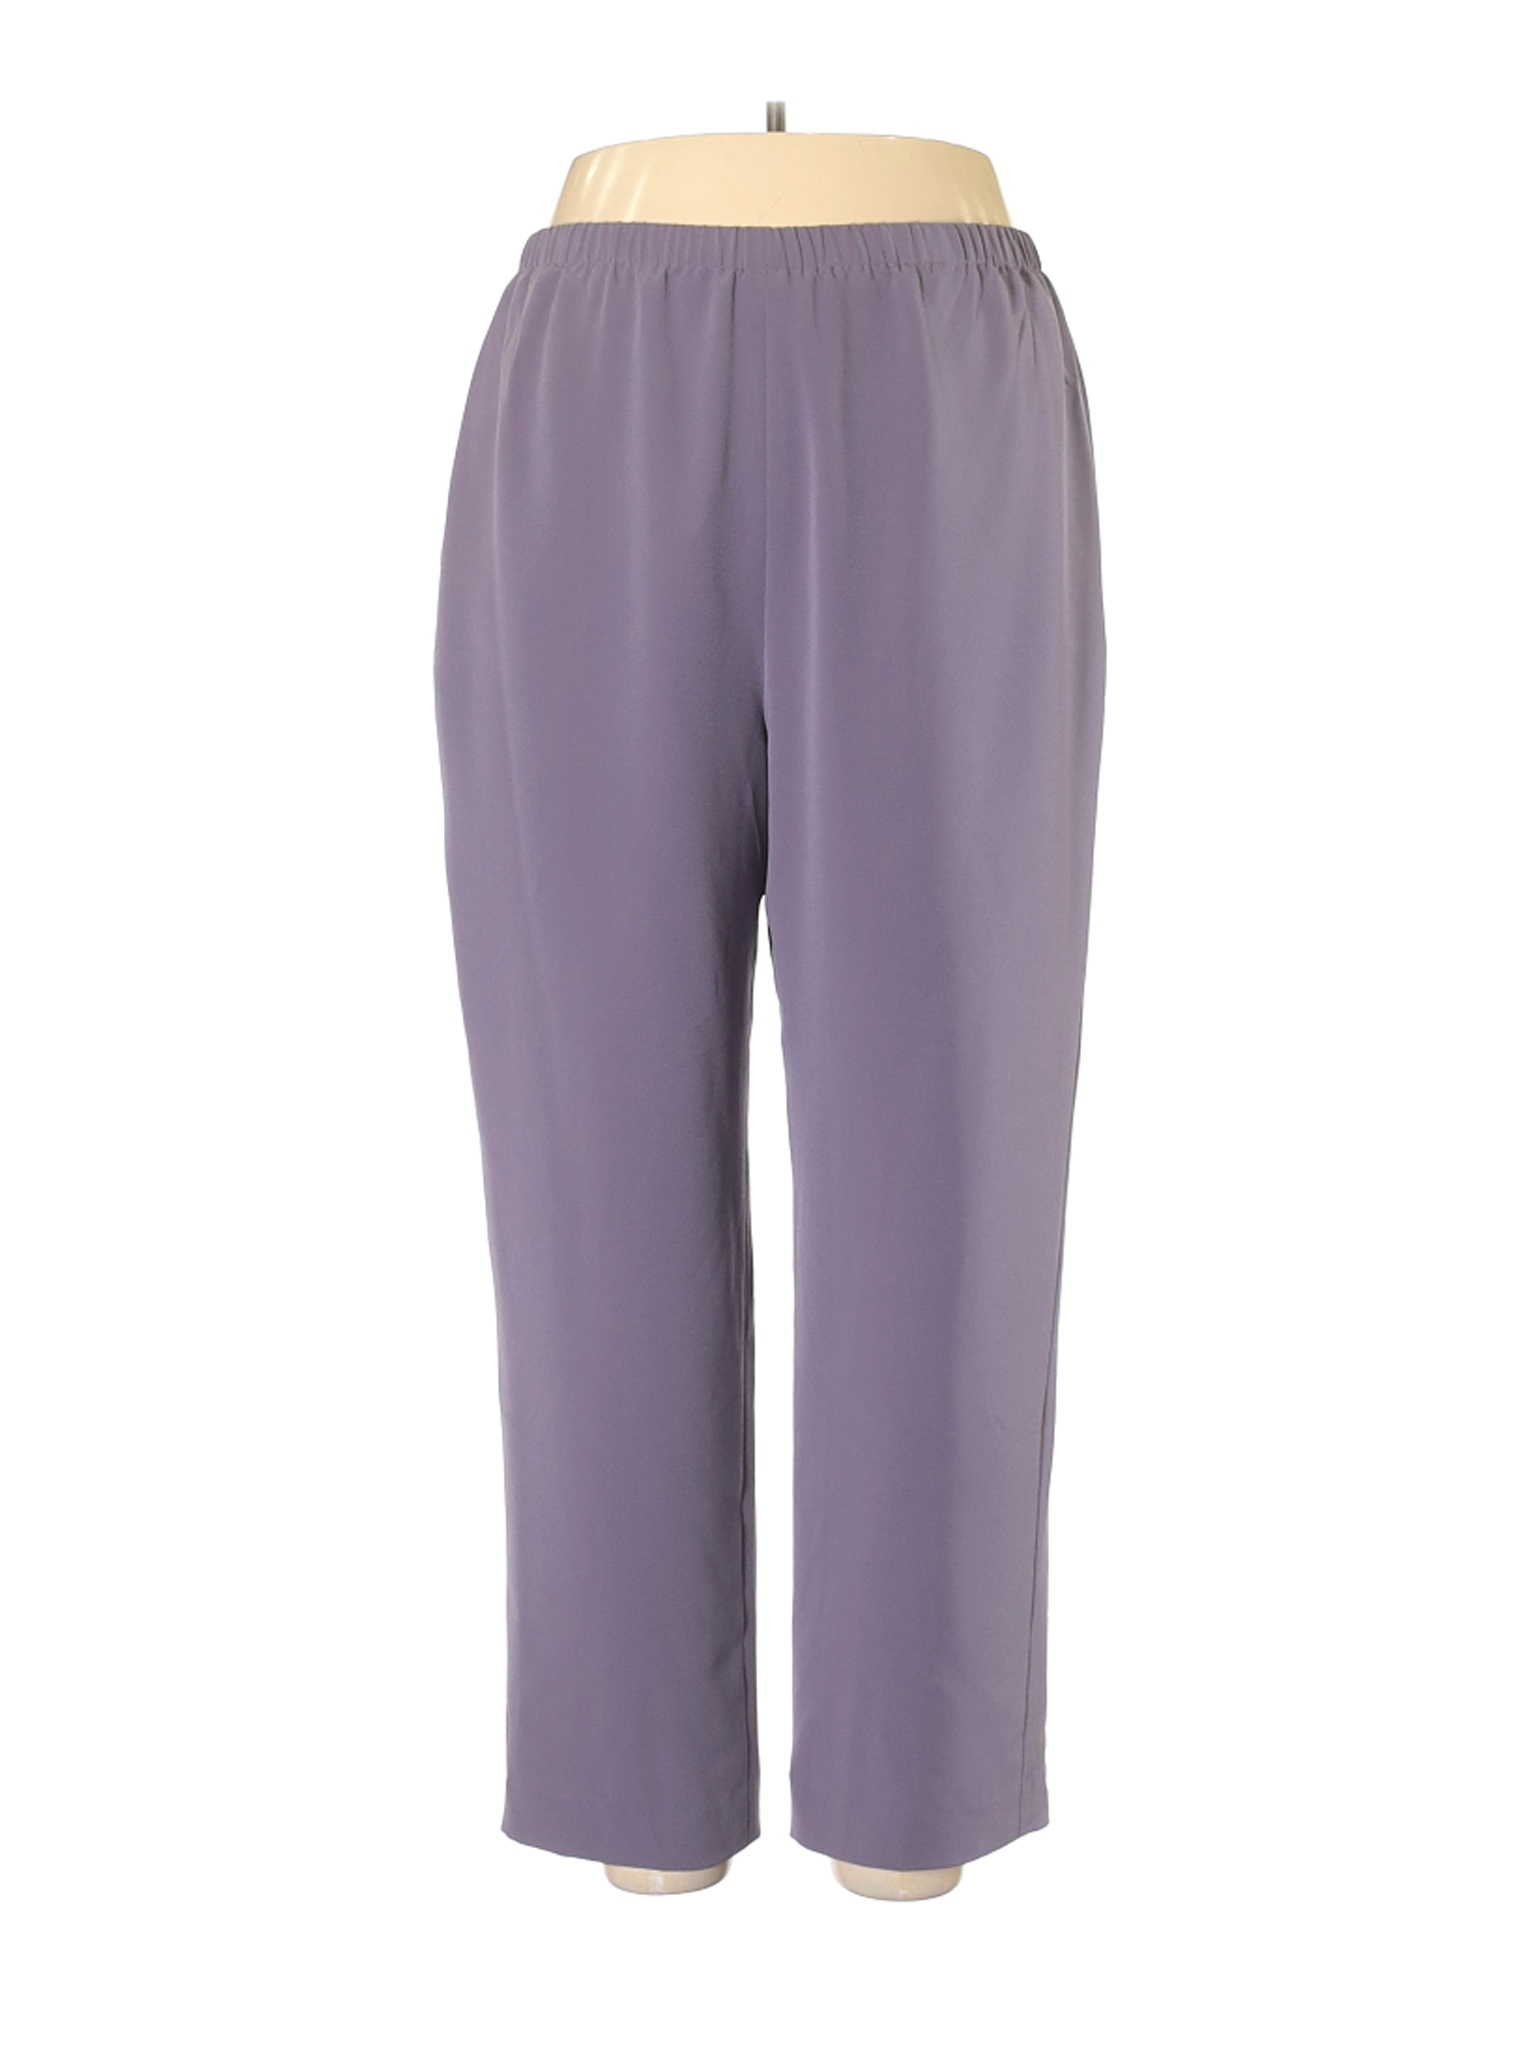 Draper's & Damon's Women Purple Dress Pants 14 Petites | eBay